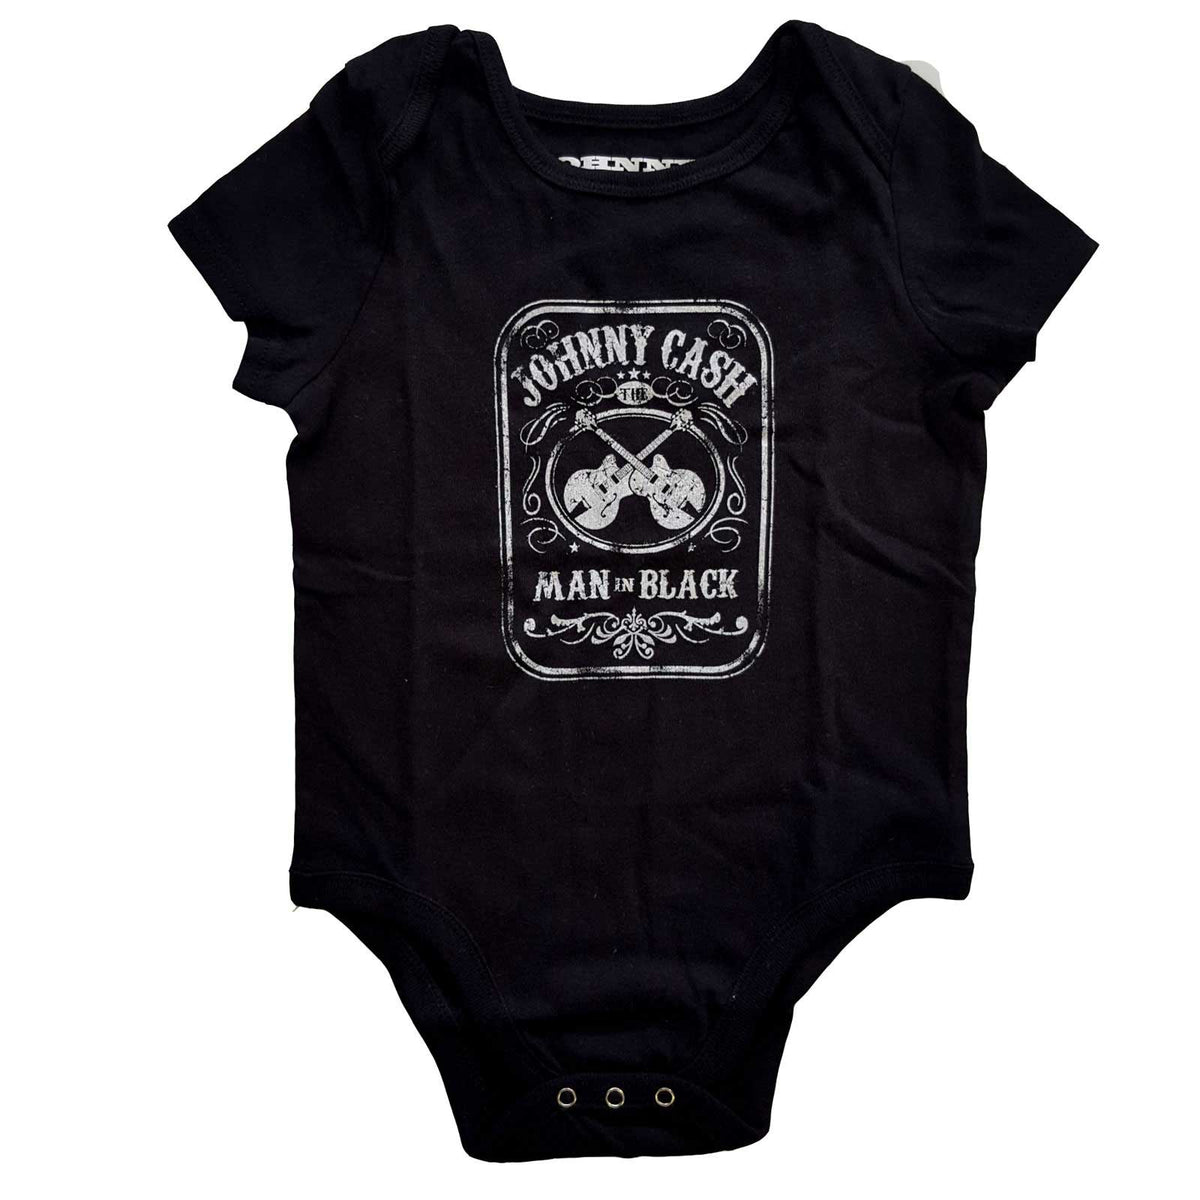 Johnny Cash Kids Baby Grow - Man in Black - Produit sous licence officielle